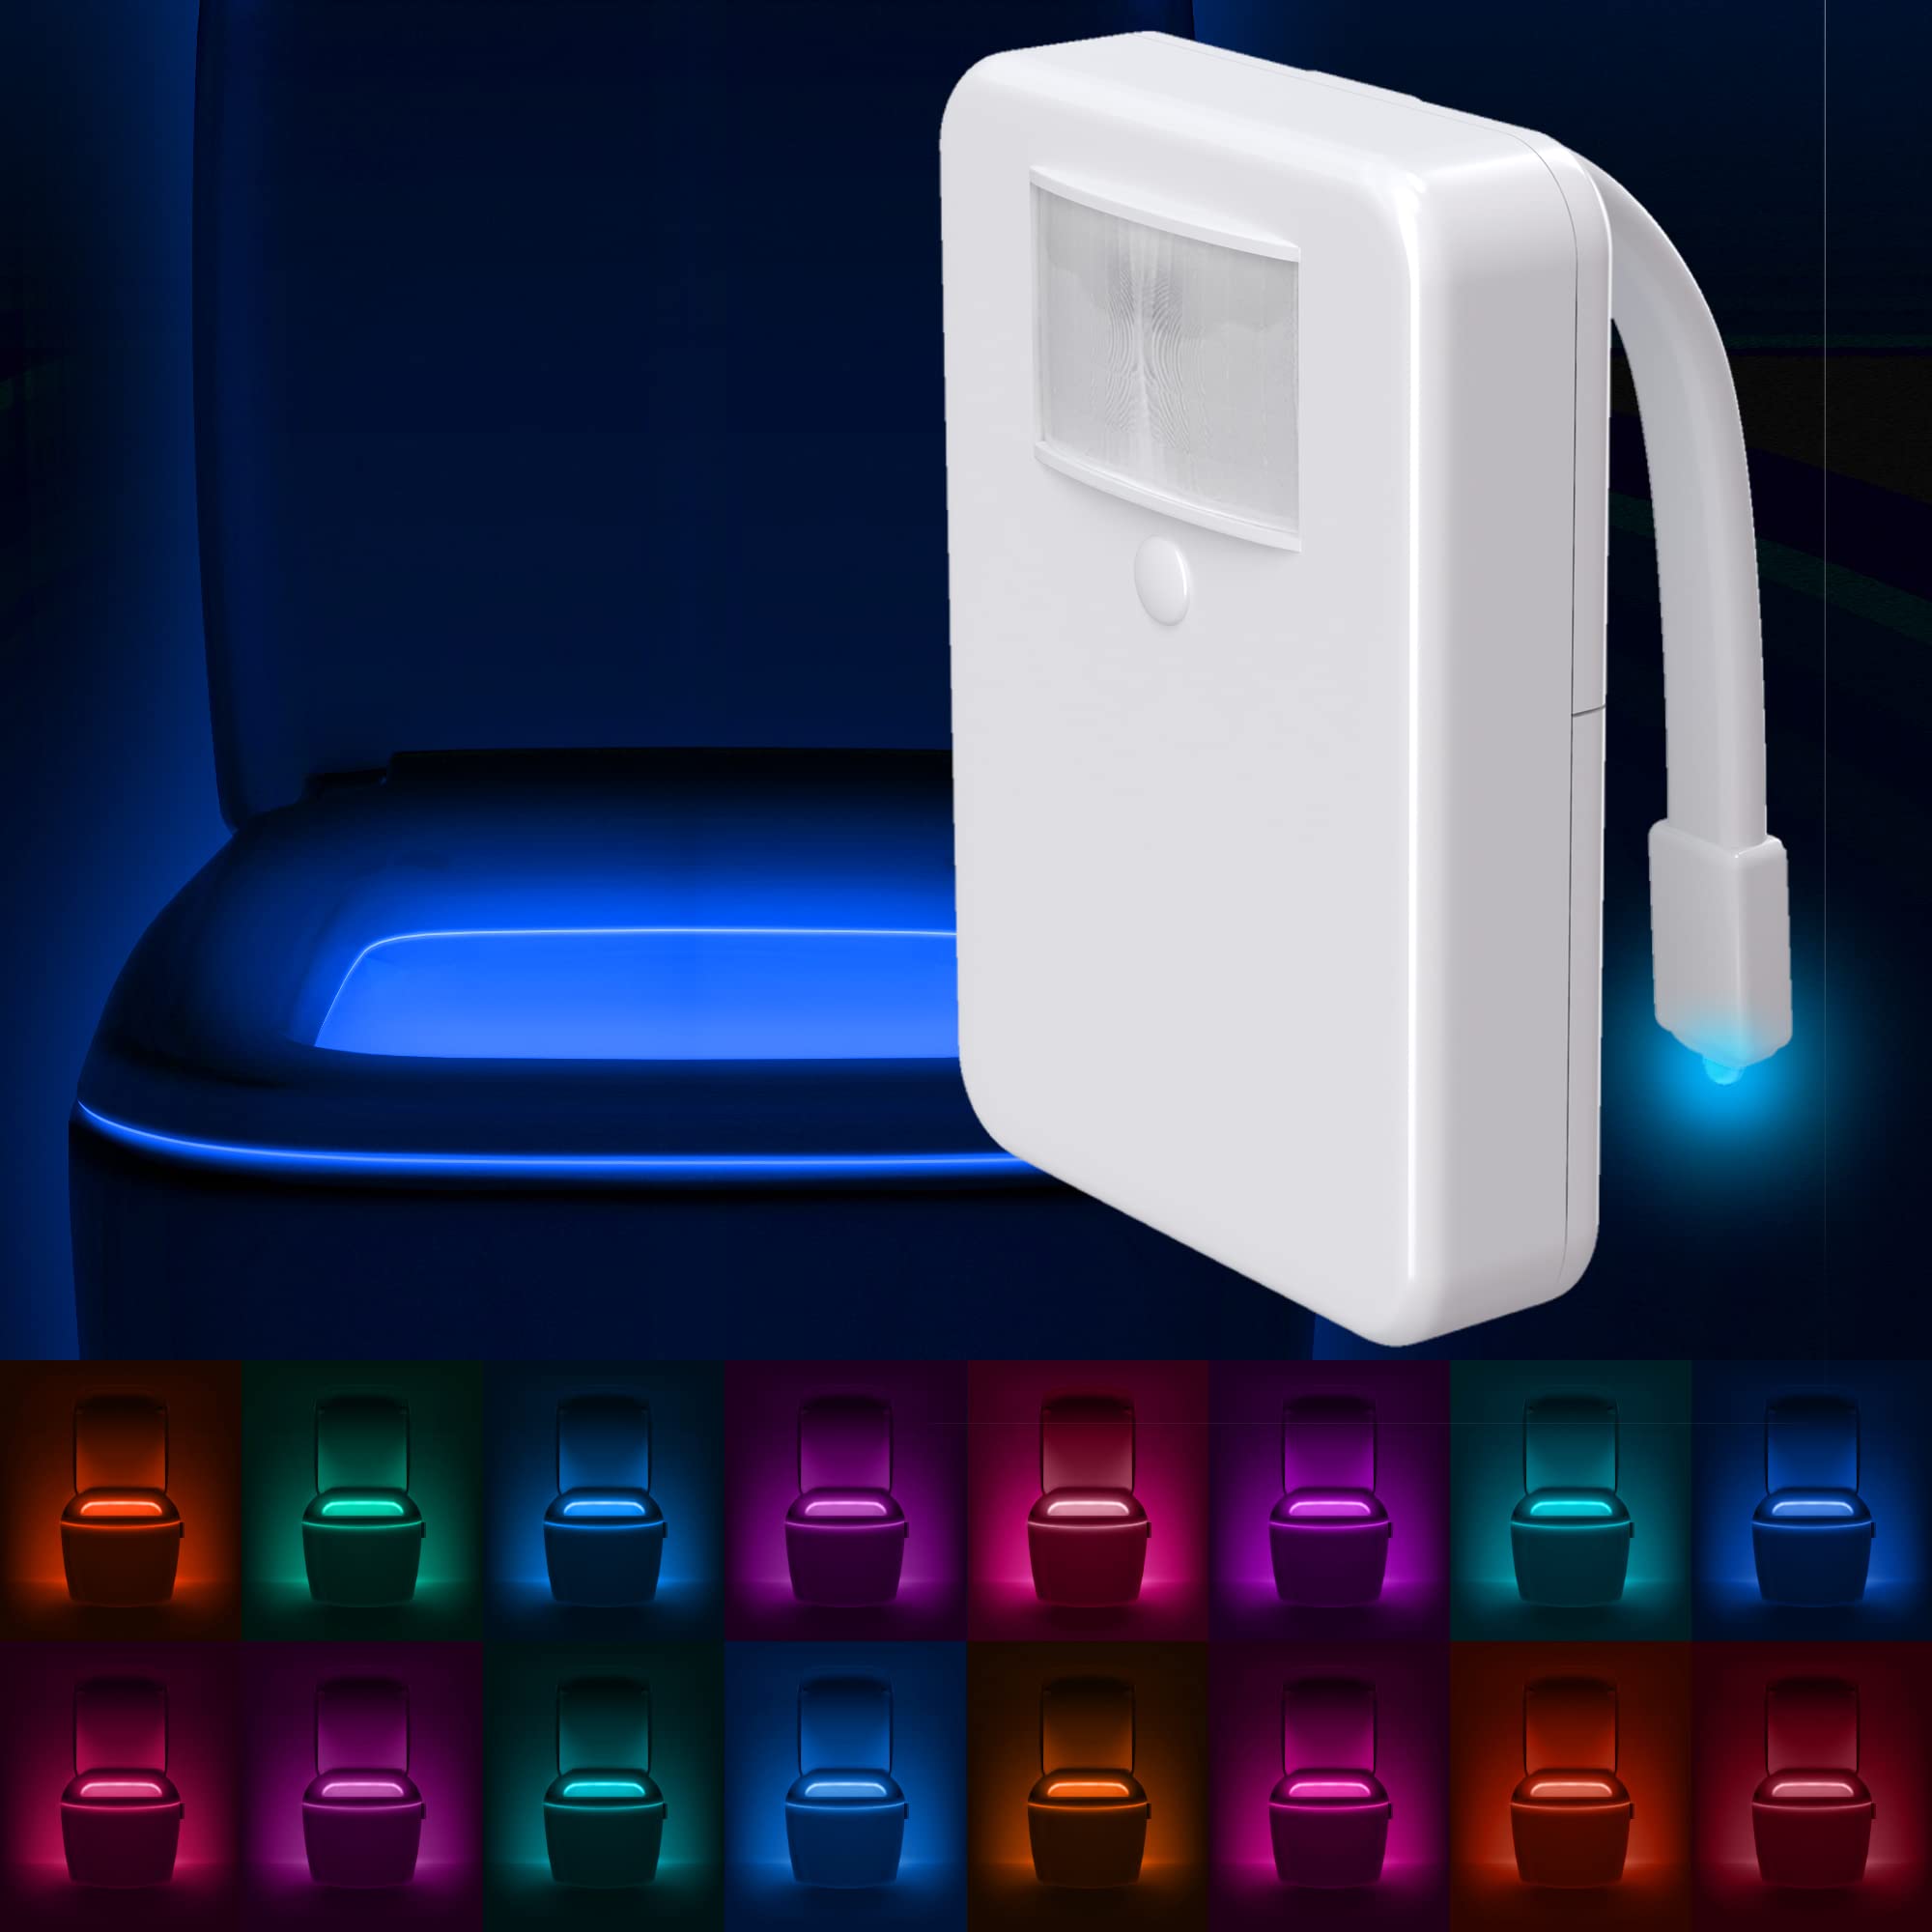 LumiLux Toilet Light with Motion Detection Sensor - 16-Color LED Bathroom Toilet Bowl Light (White)